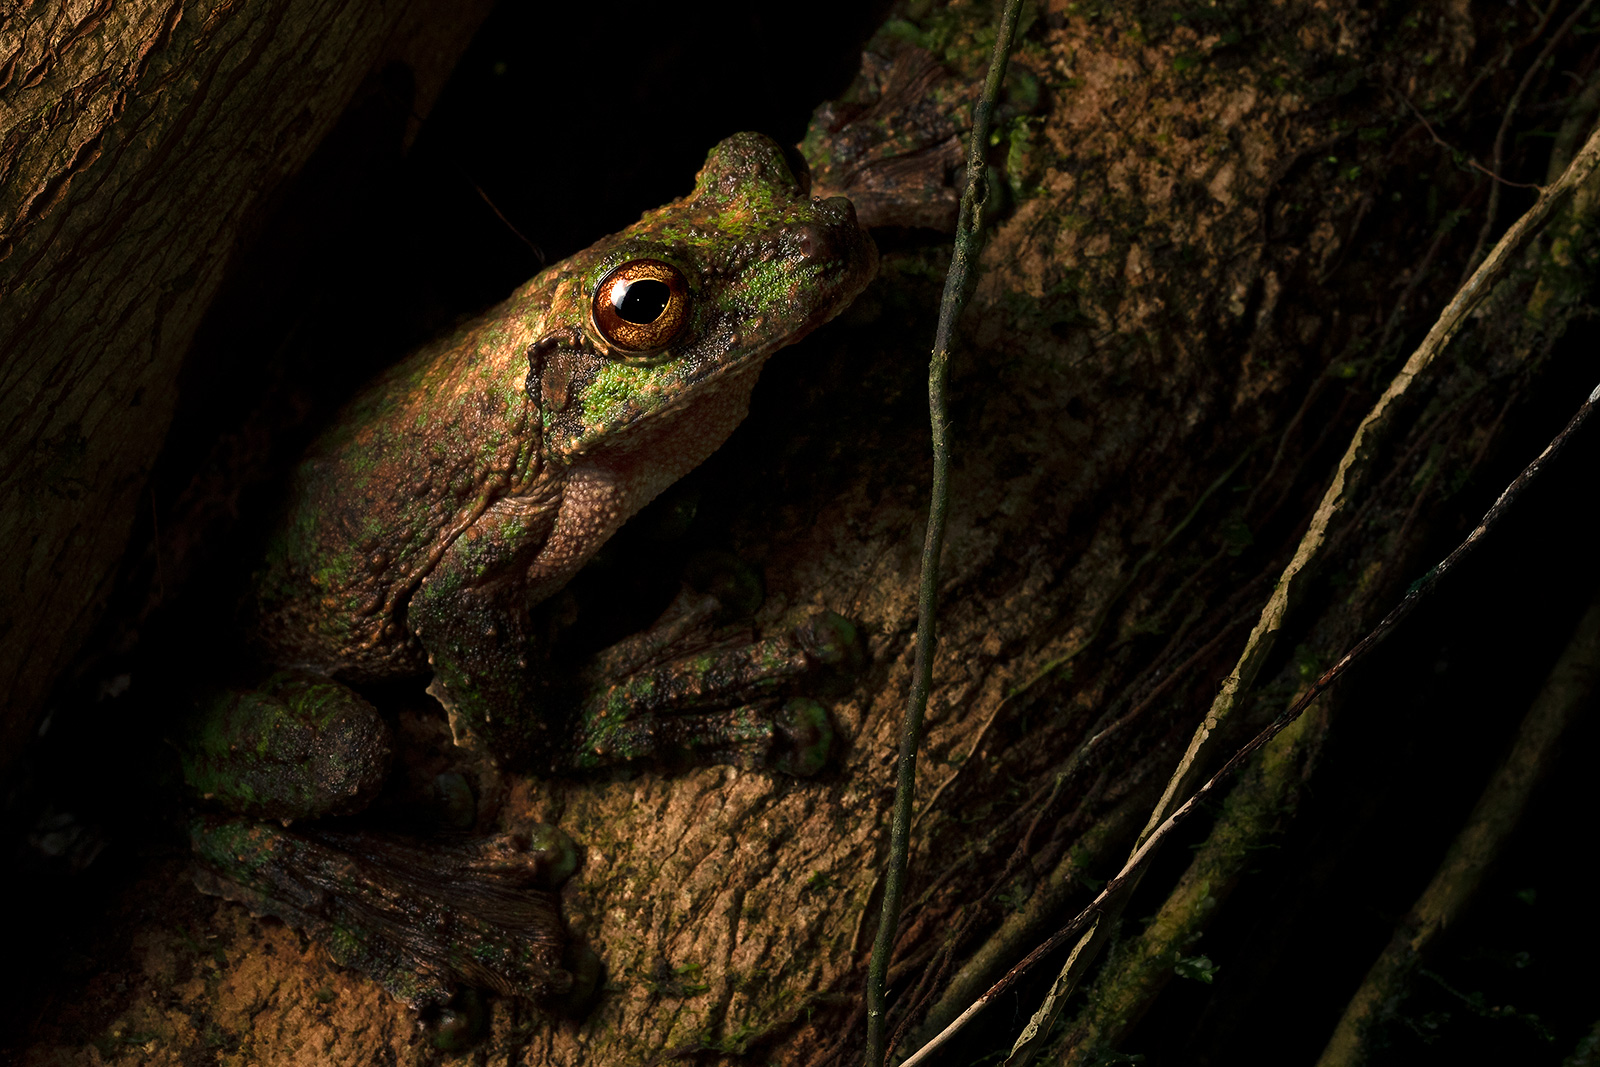 Image of a Phantasmal Fringe-limbed Frog coming out of a tree hole